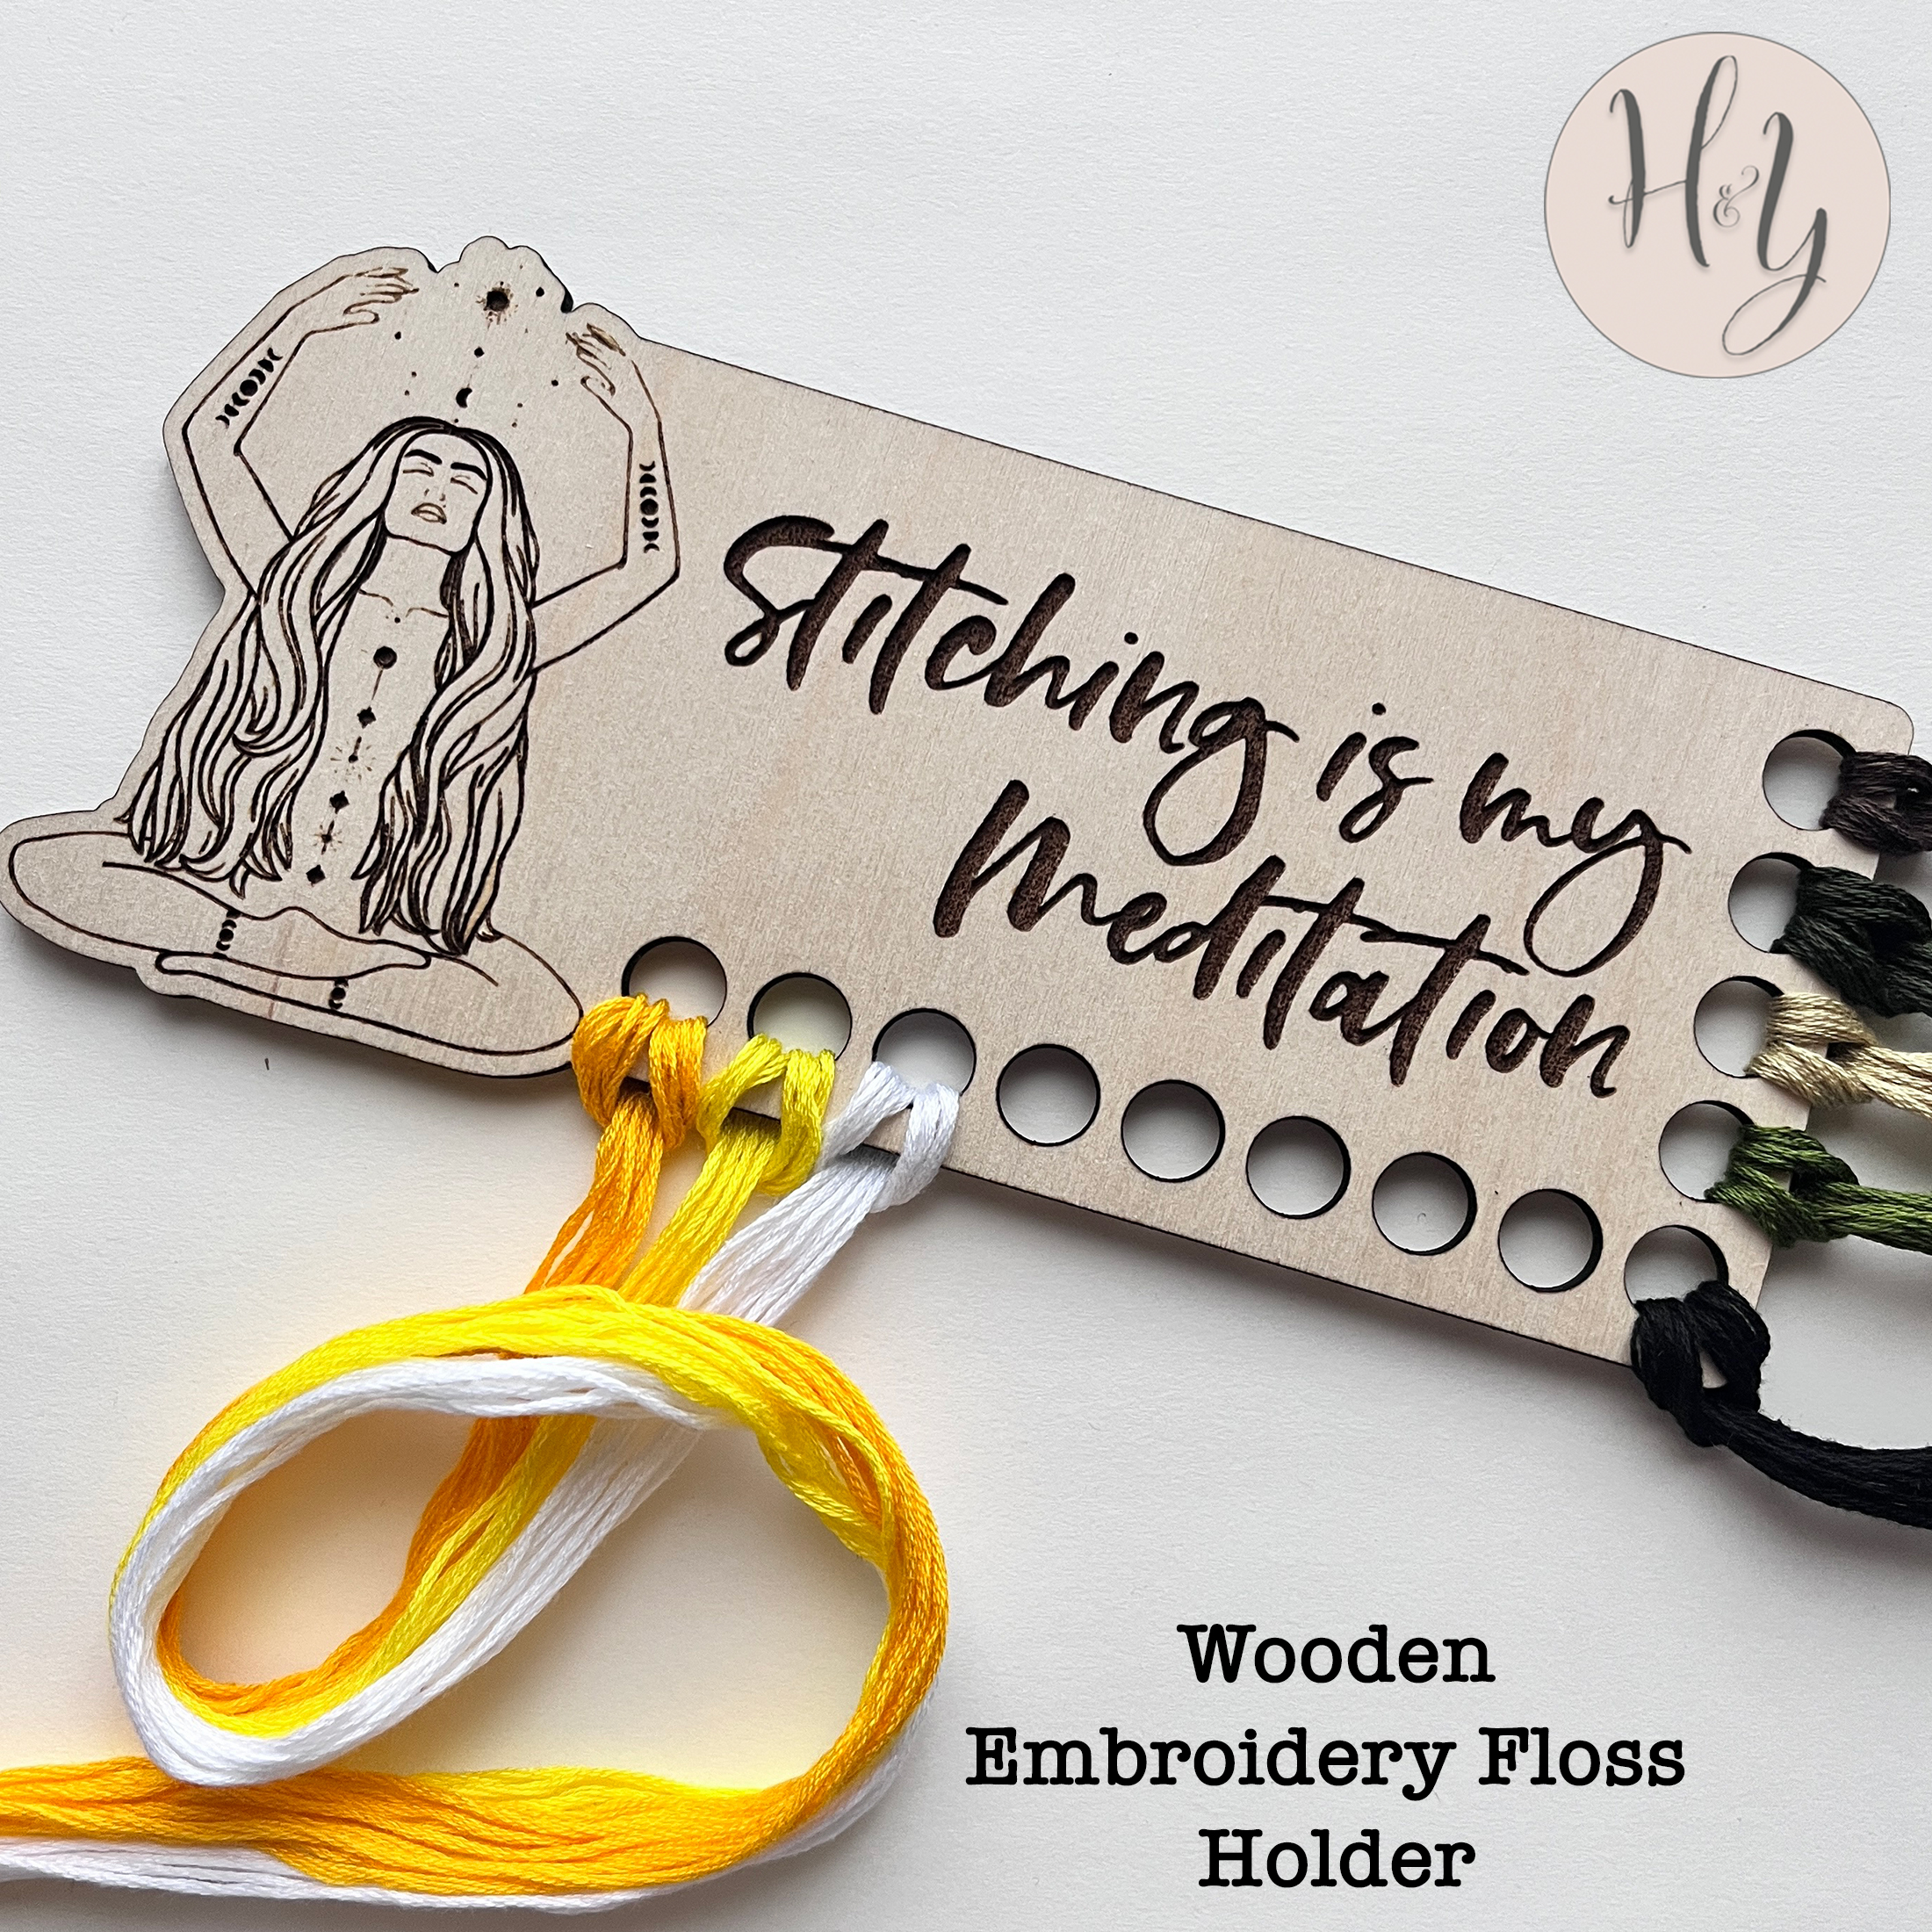 Embroidery Floss Holder Dog Theme - Hither and Yon Studio